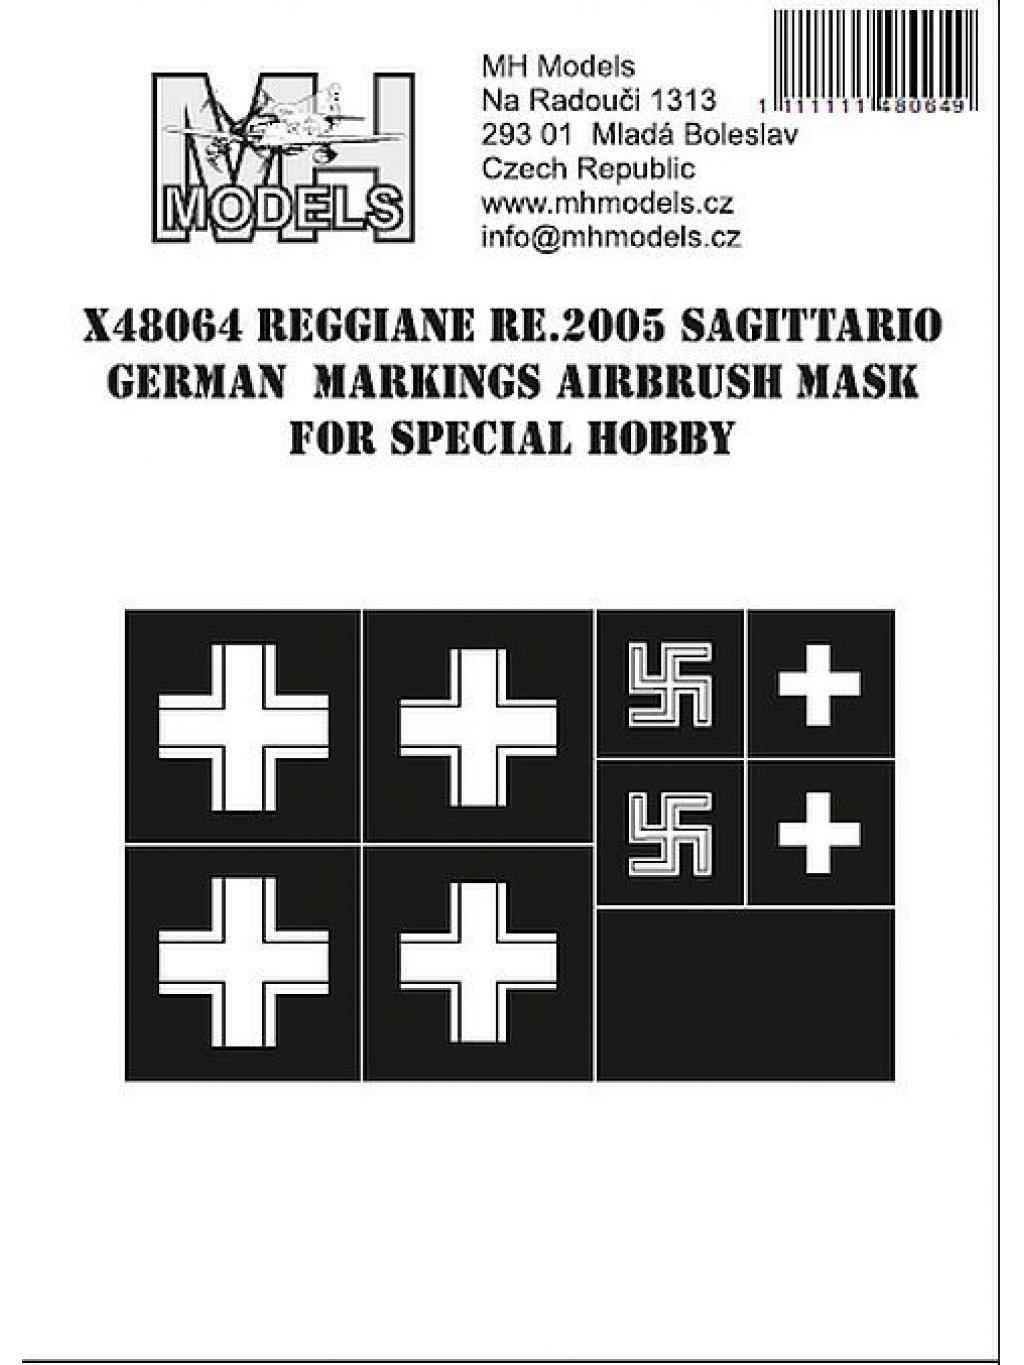 Reggiane Re.2005 Sagittario German Markings airbrush mask for Special Hobby